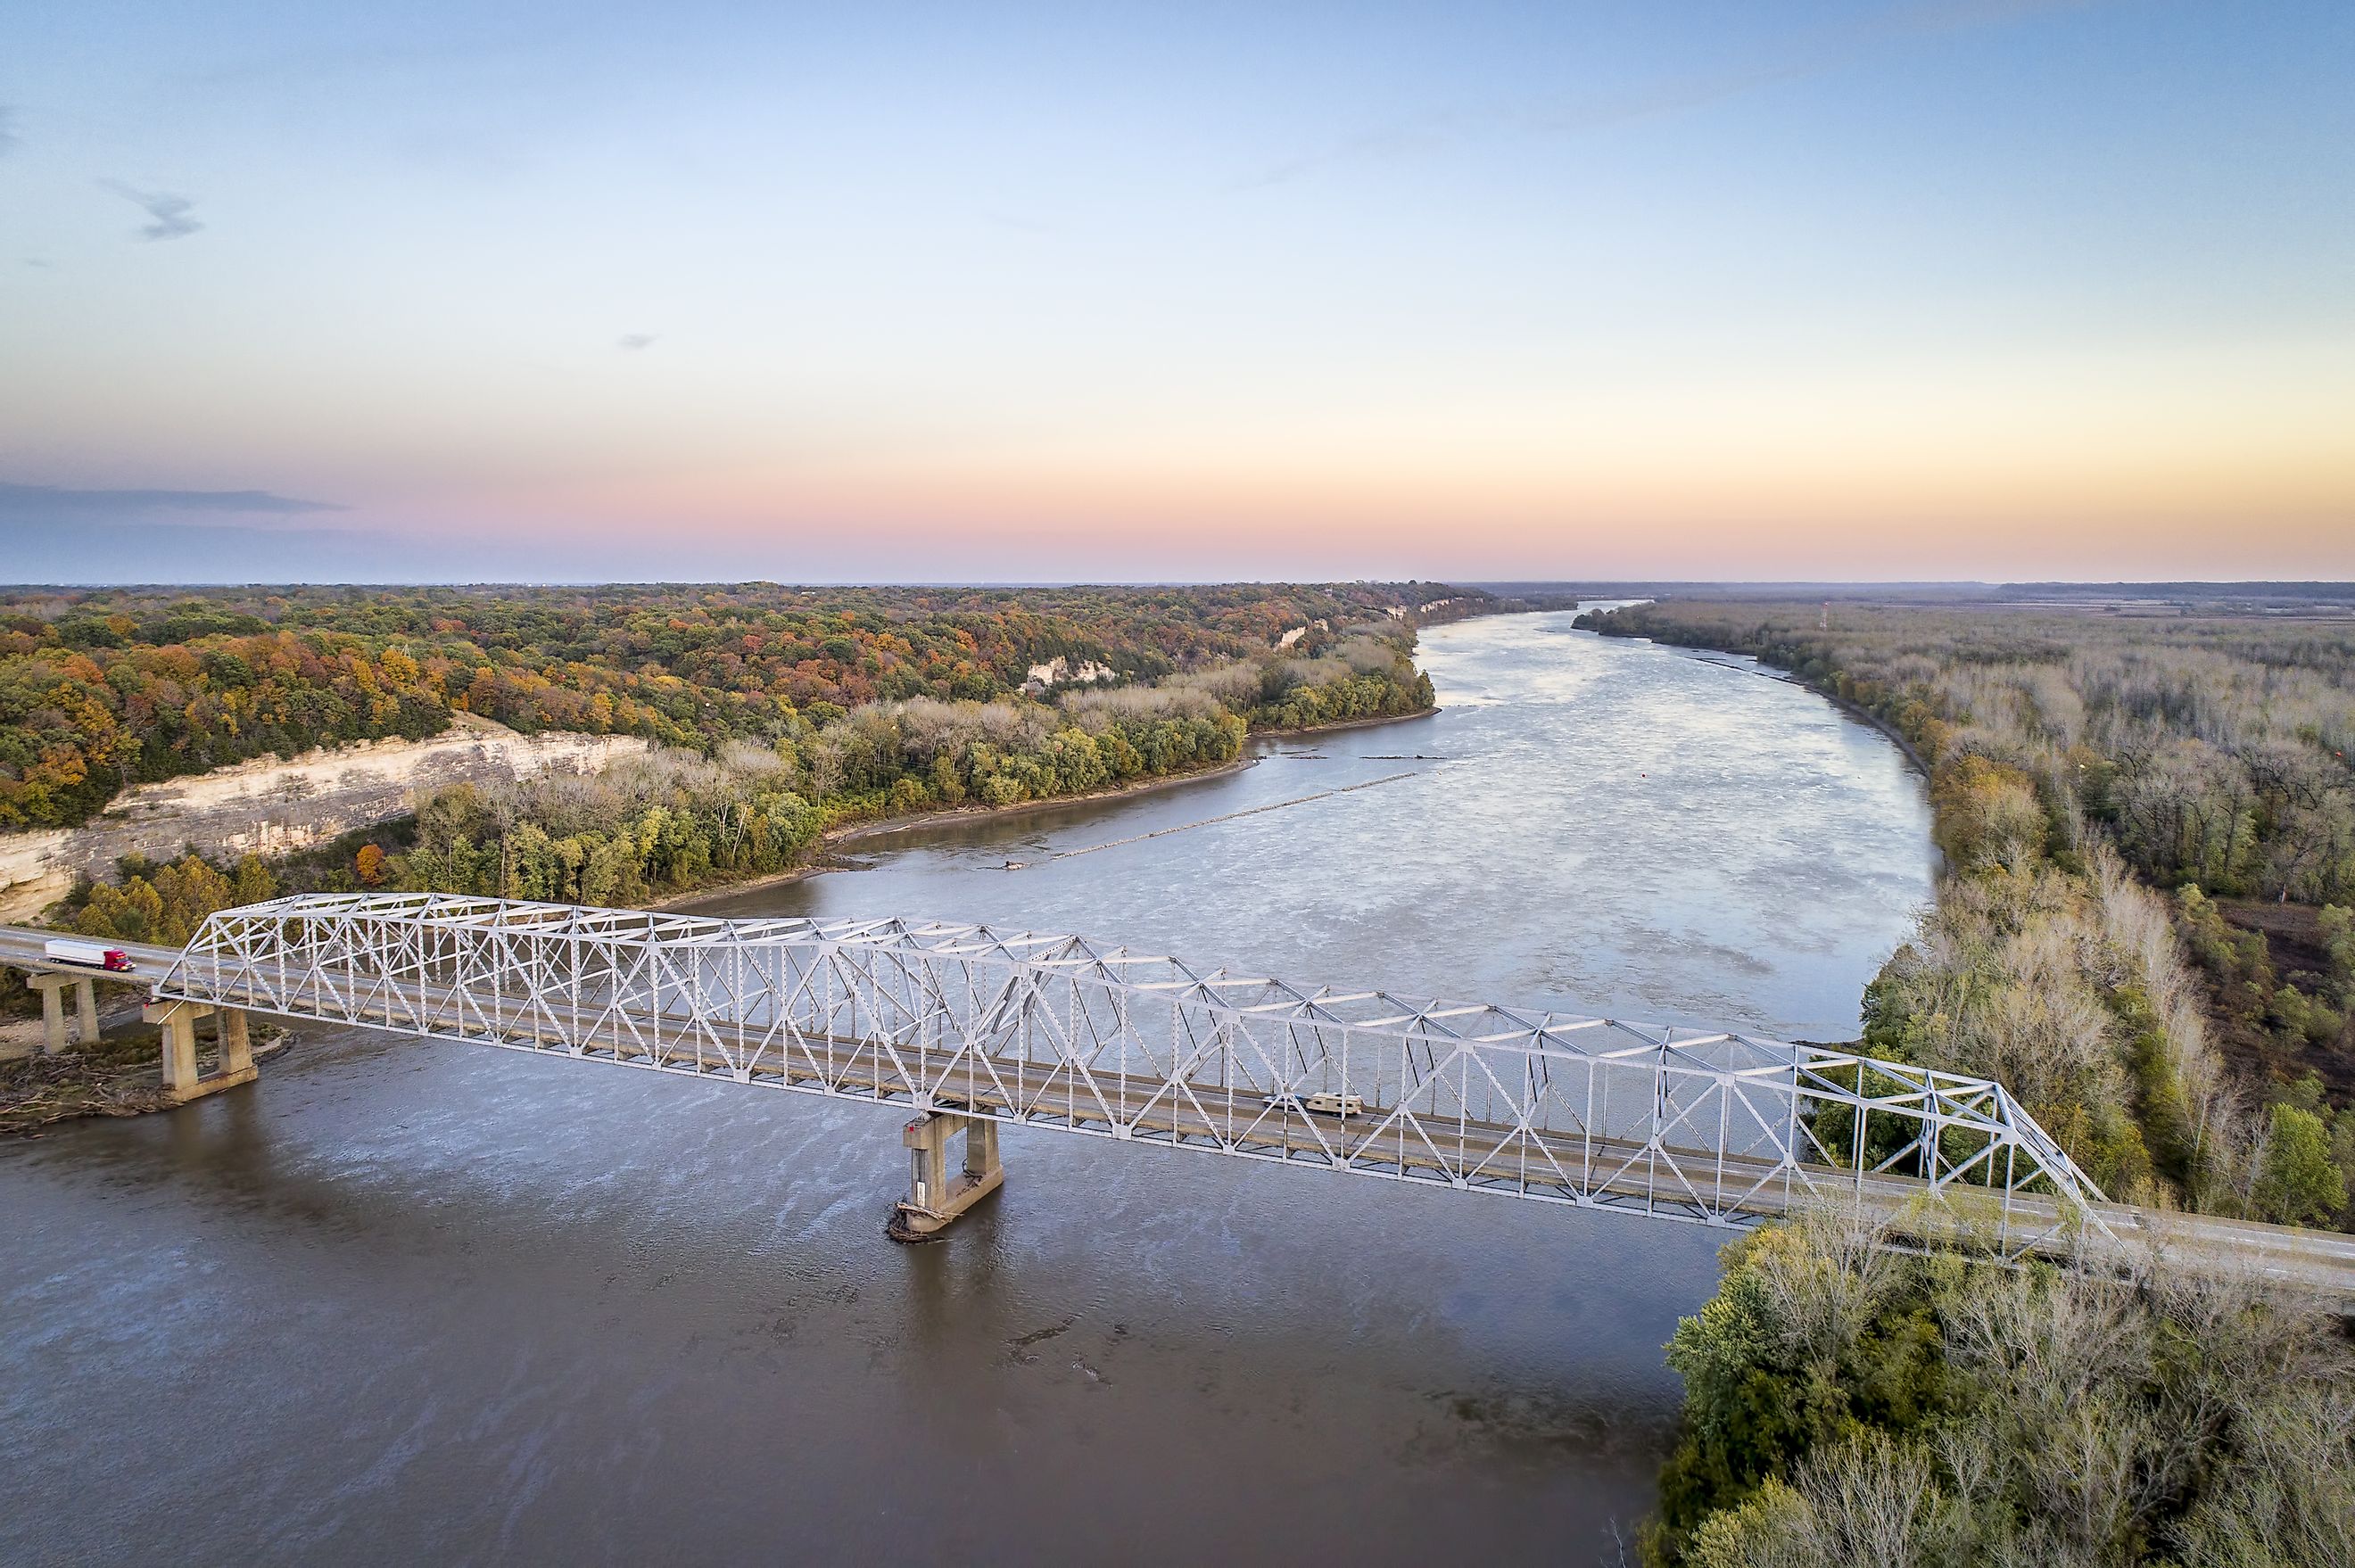 Missouri River Bridge near Rocheport. Image credit marekuliasz via Shutterstock